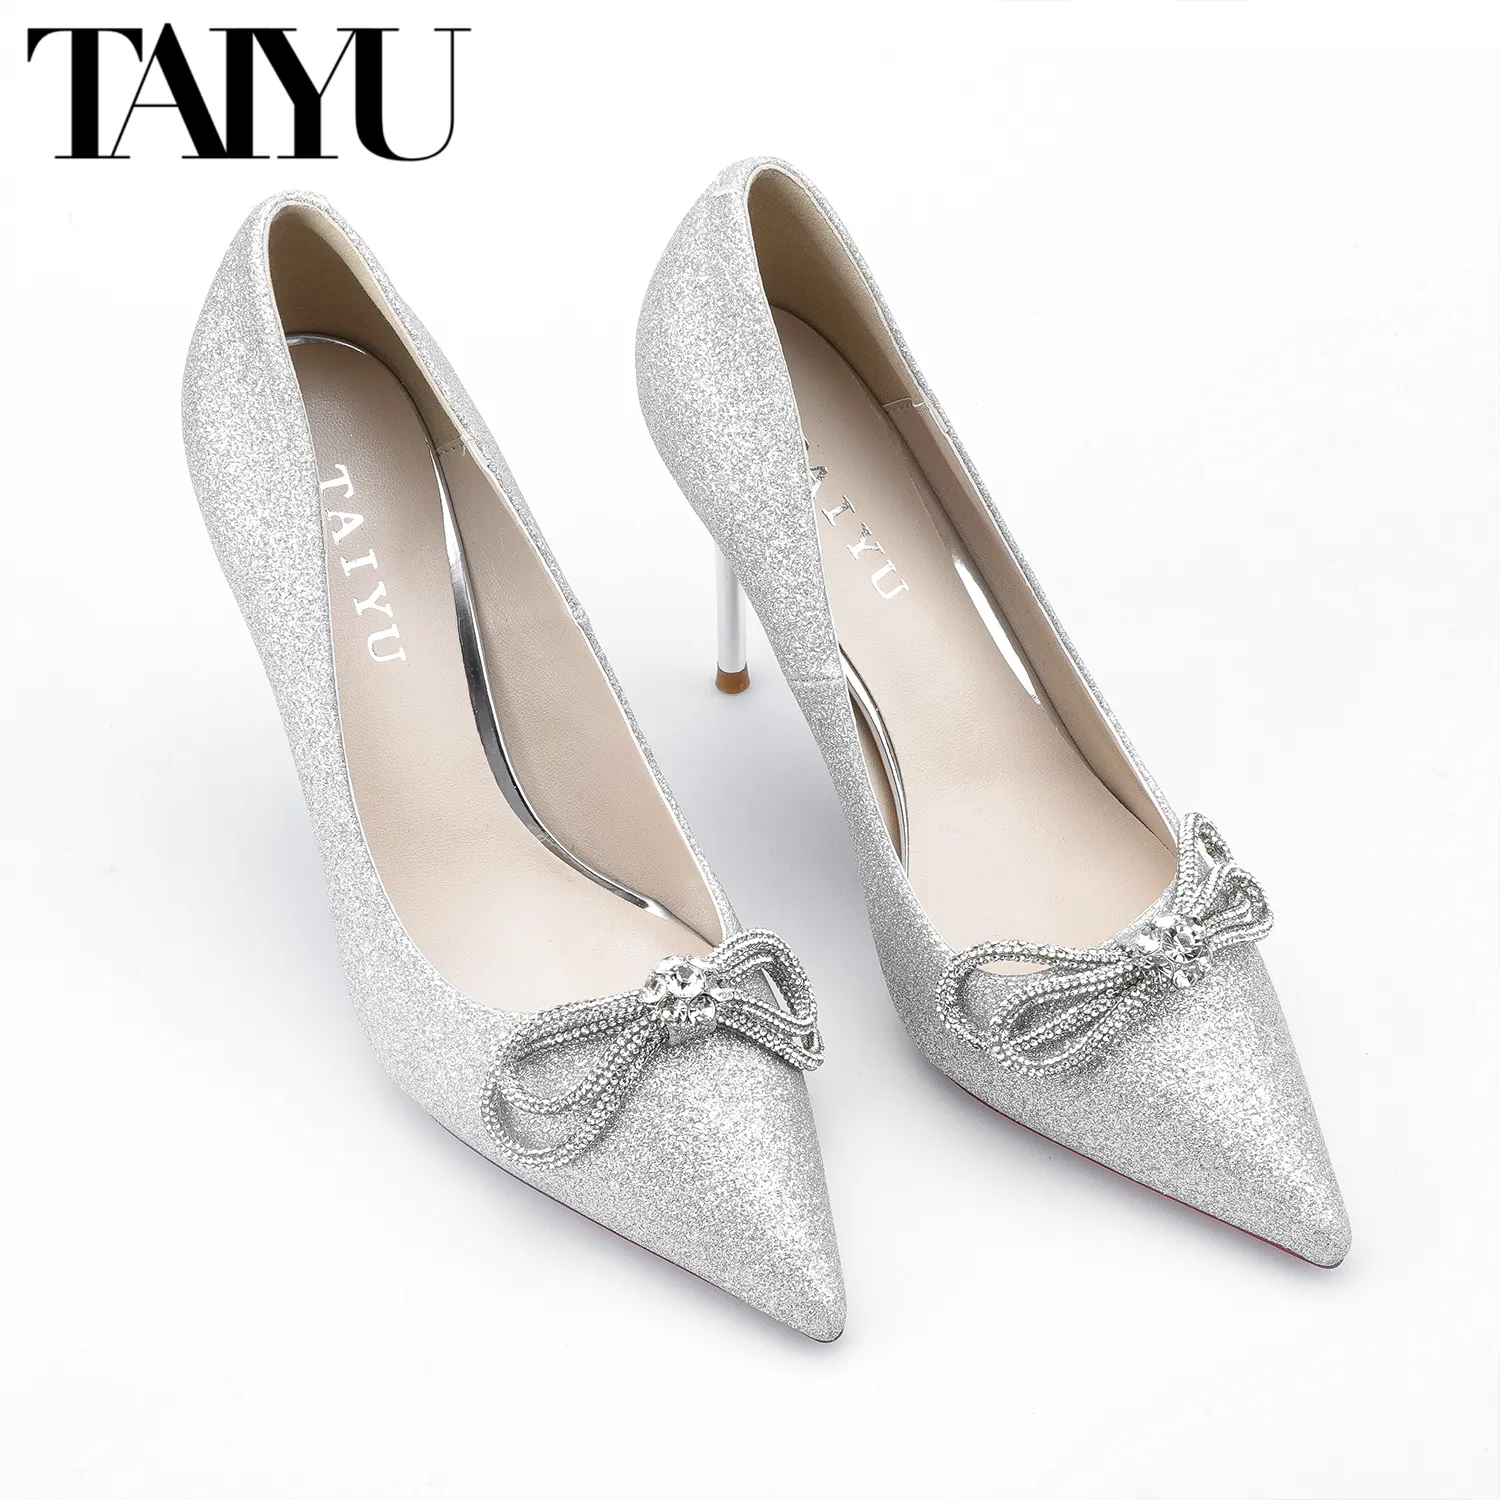 TAIYU Women's Stiletto High Heel Dress Pumps Pointy Toe Bridal Wedding Evening Party women Shoes with Rhinestone heel